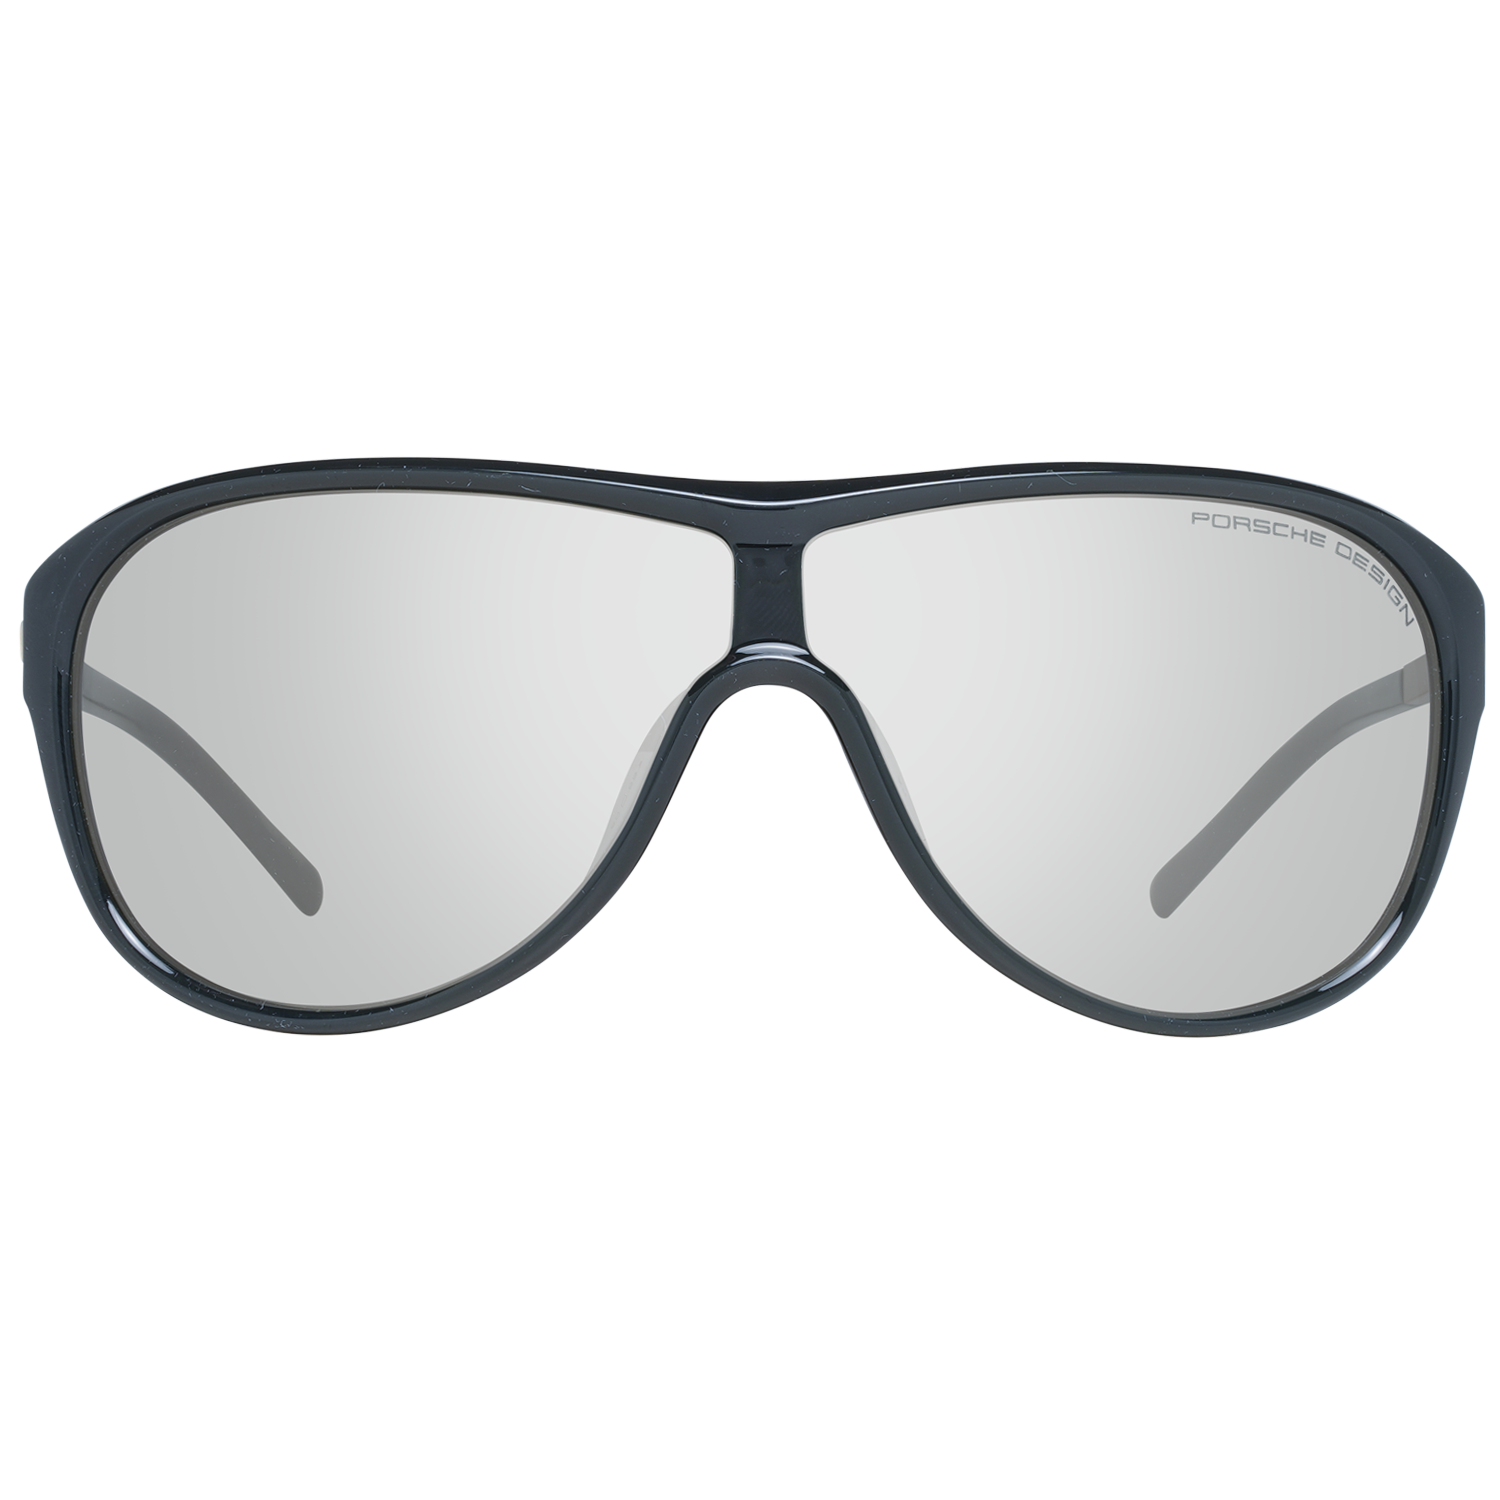 Porsche Design Sunglasses Porsche Design Sunglasses P8598 C 69 Eyeglasses Eyewear UK USA Australia 